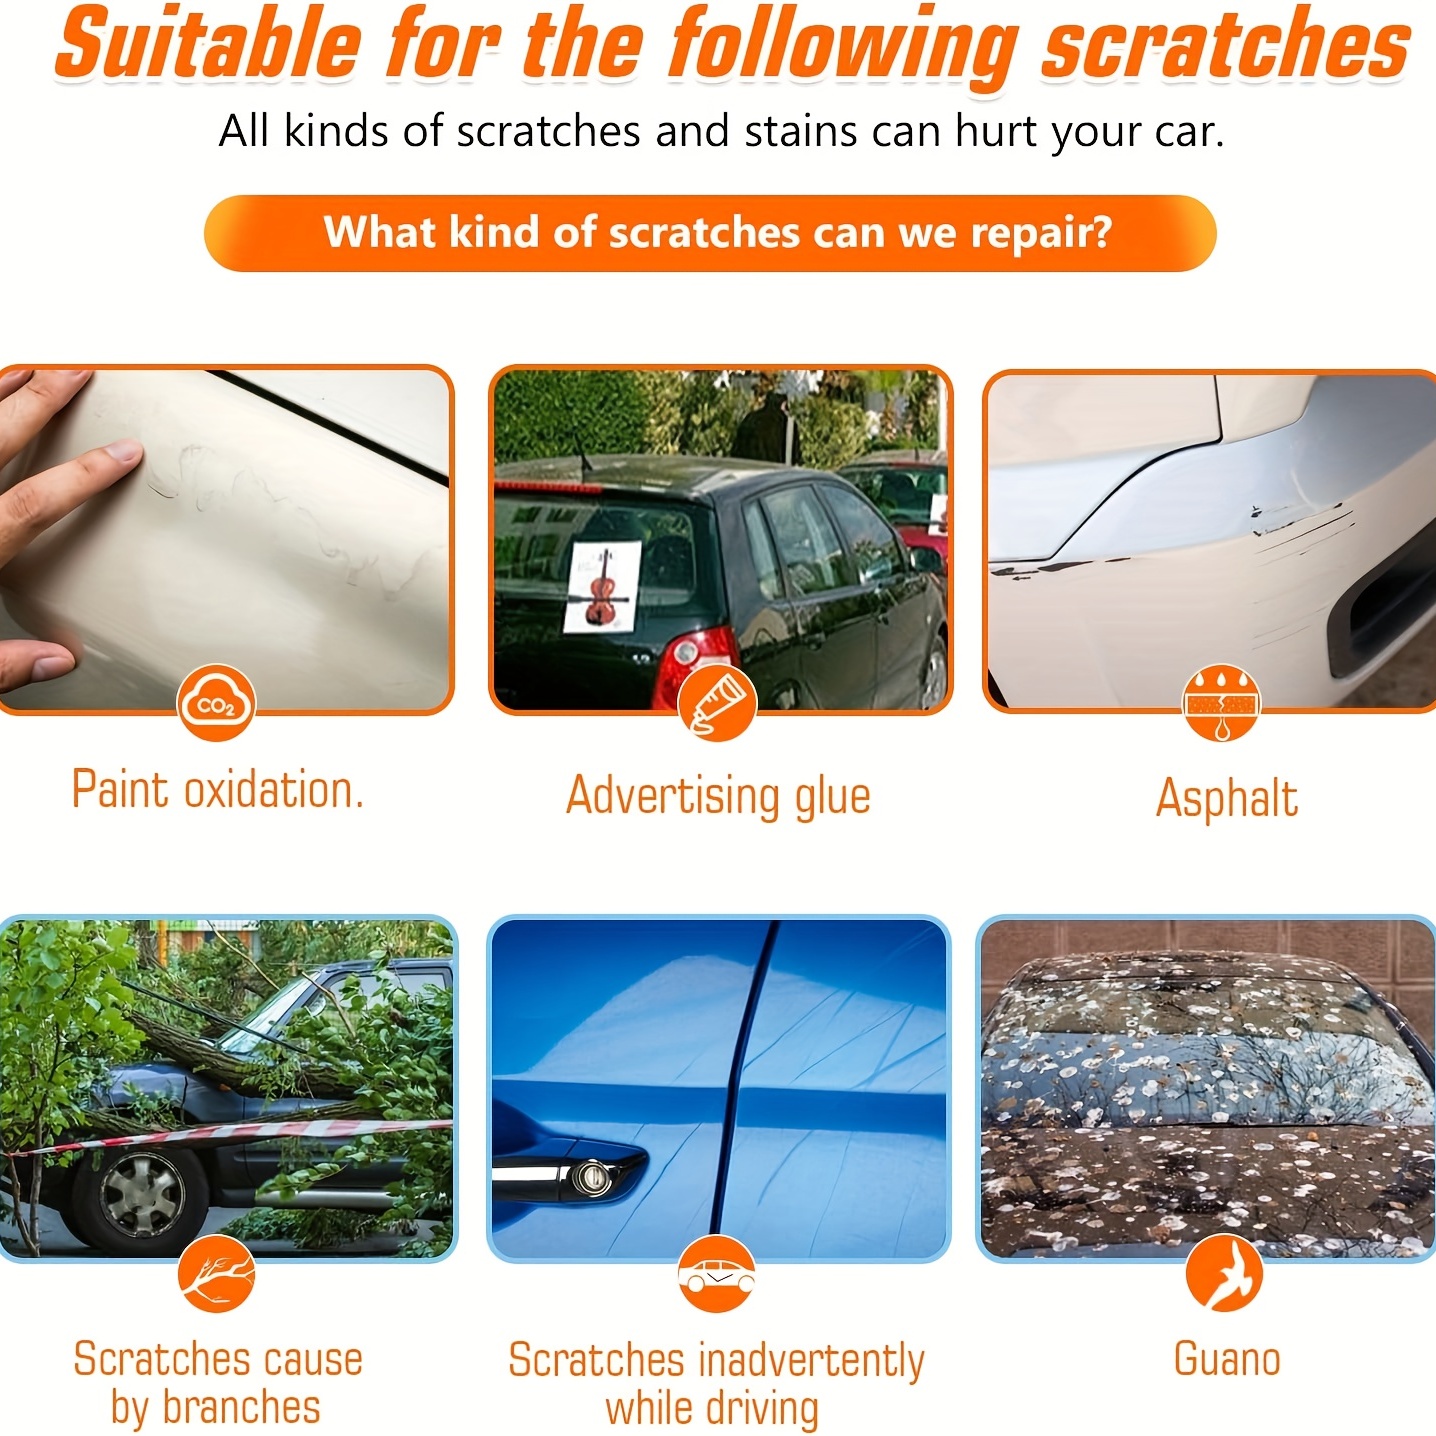 6Pcs Car Scratch Remover Cloth Nano Sparkle Cloth For Car Scratches RemovFZ